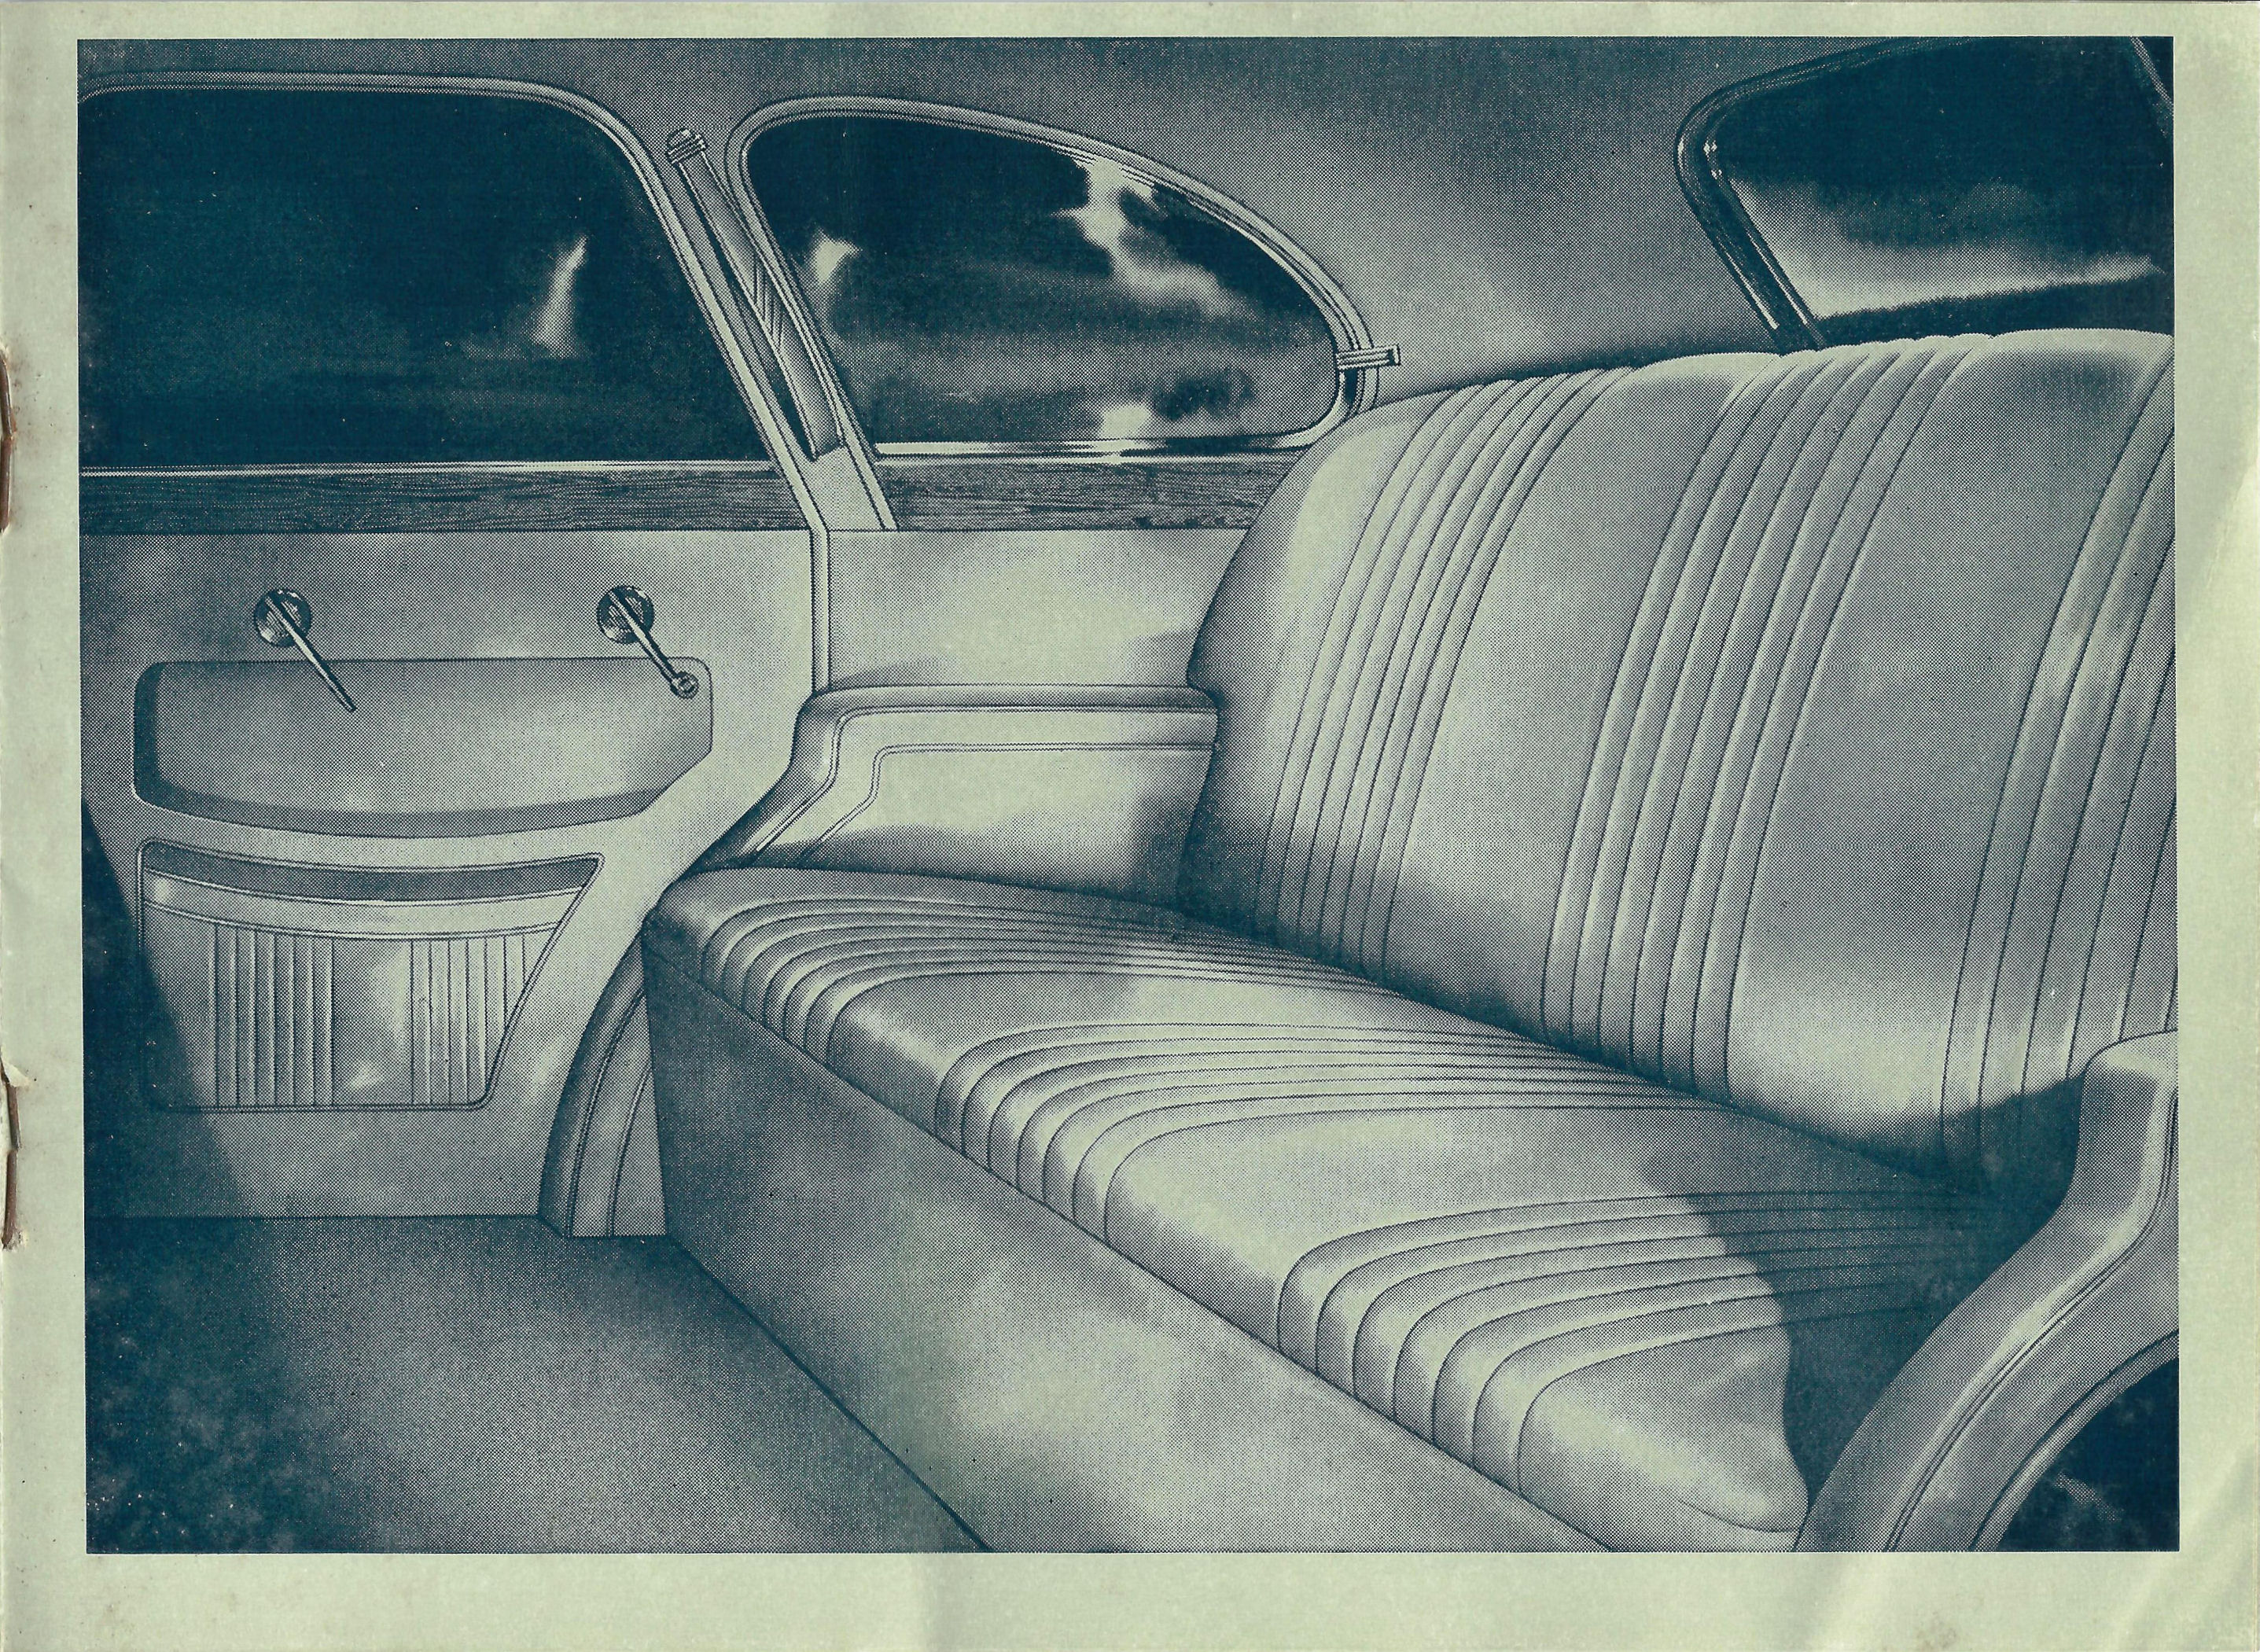 1939_Chevrolet-09